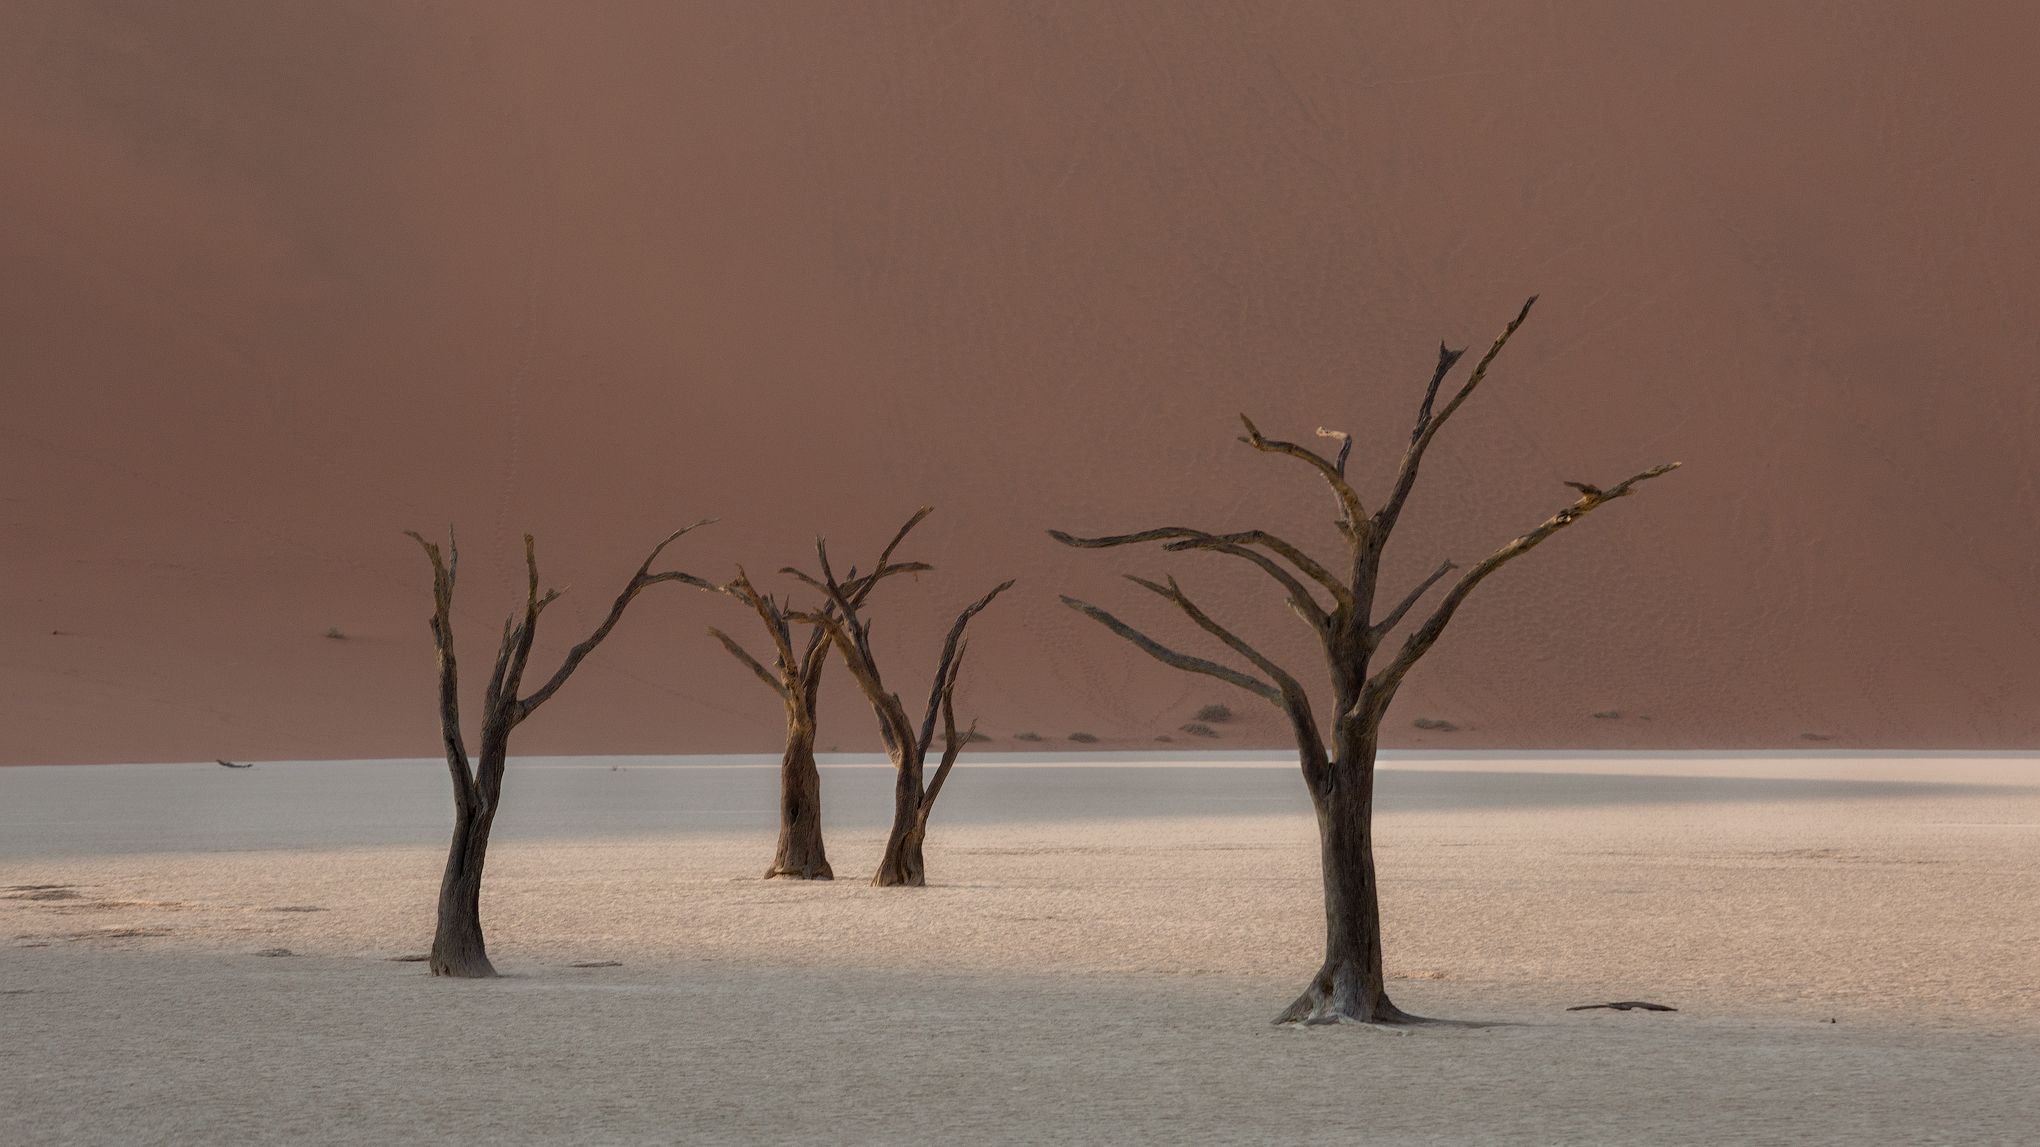  #Deadvley Valley #Valley #namibia #africa #duna #tree #дедвлей  #африка  #деревья  #намибия #дюна #песок #мертвые деревья, Наталия Деркач